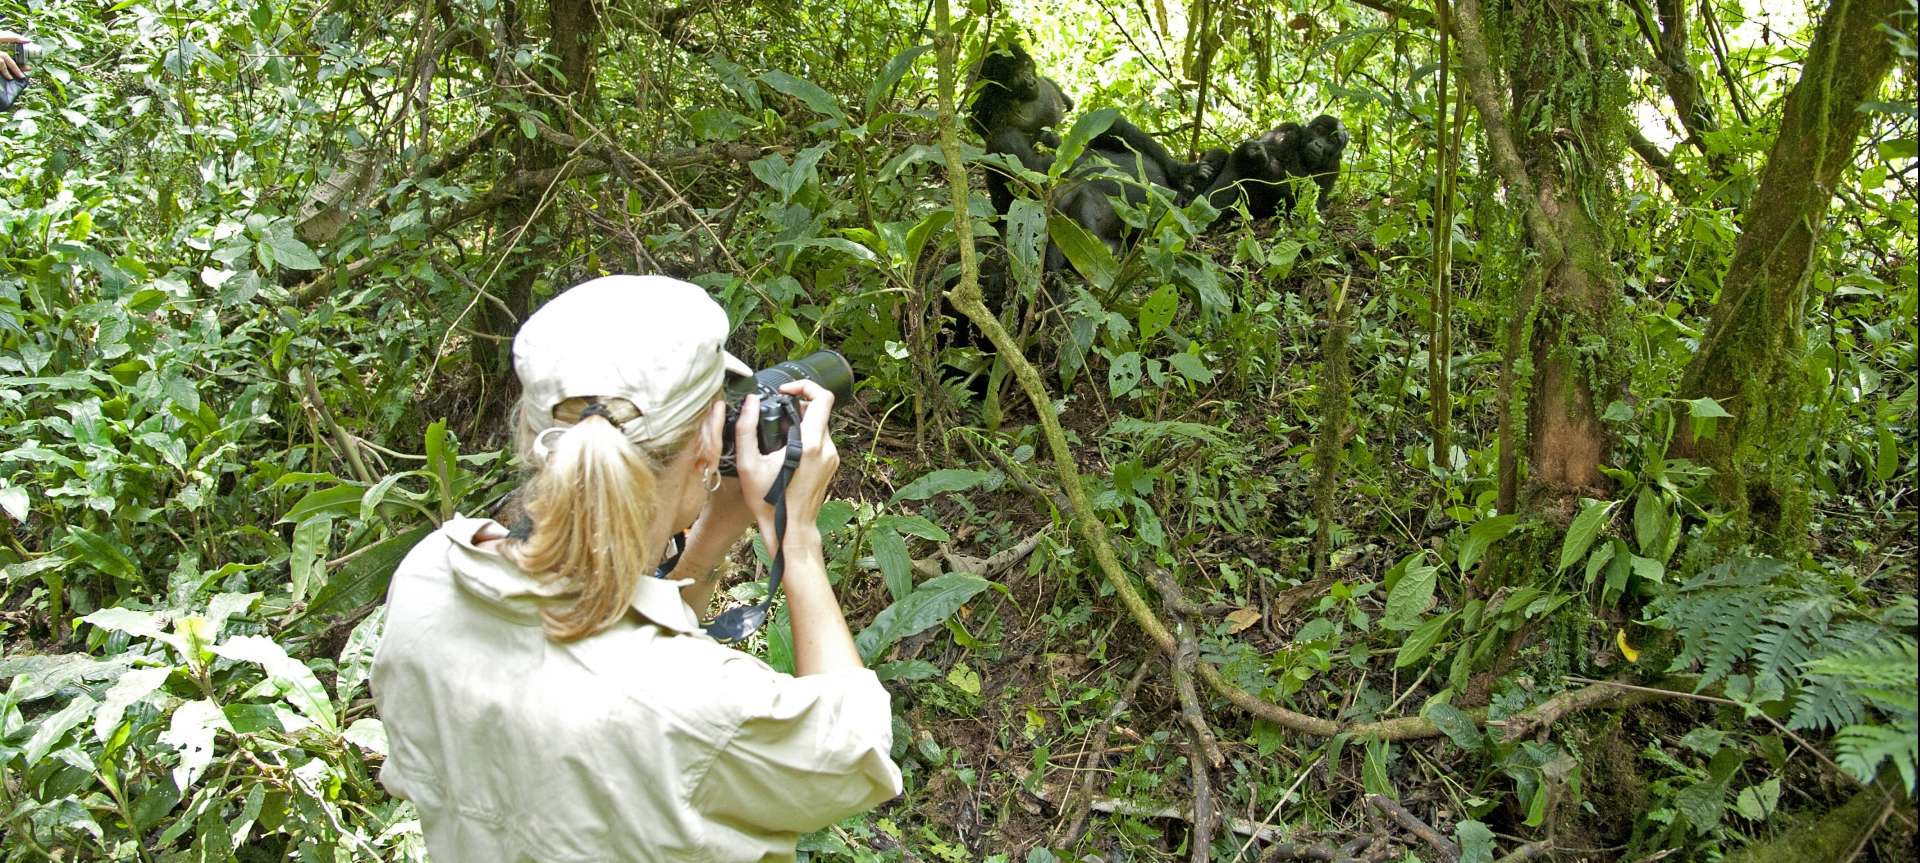 Mountain gorilla trekking in Africa - Africa Wildlife Safaris